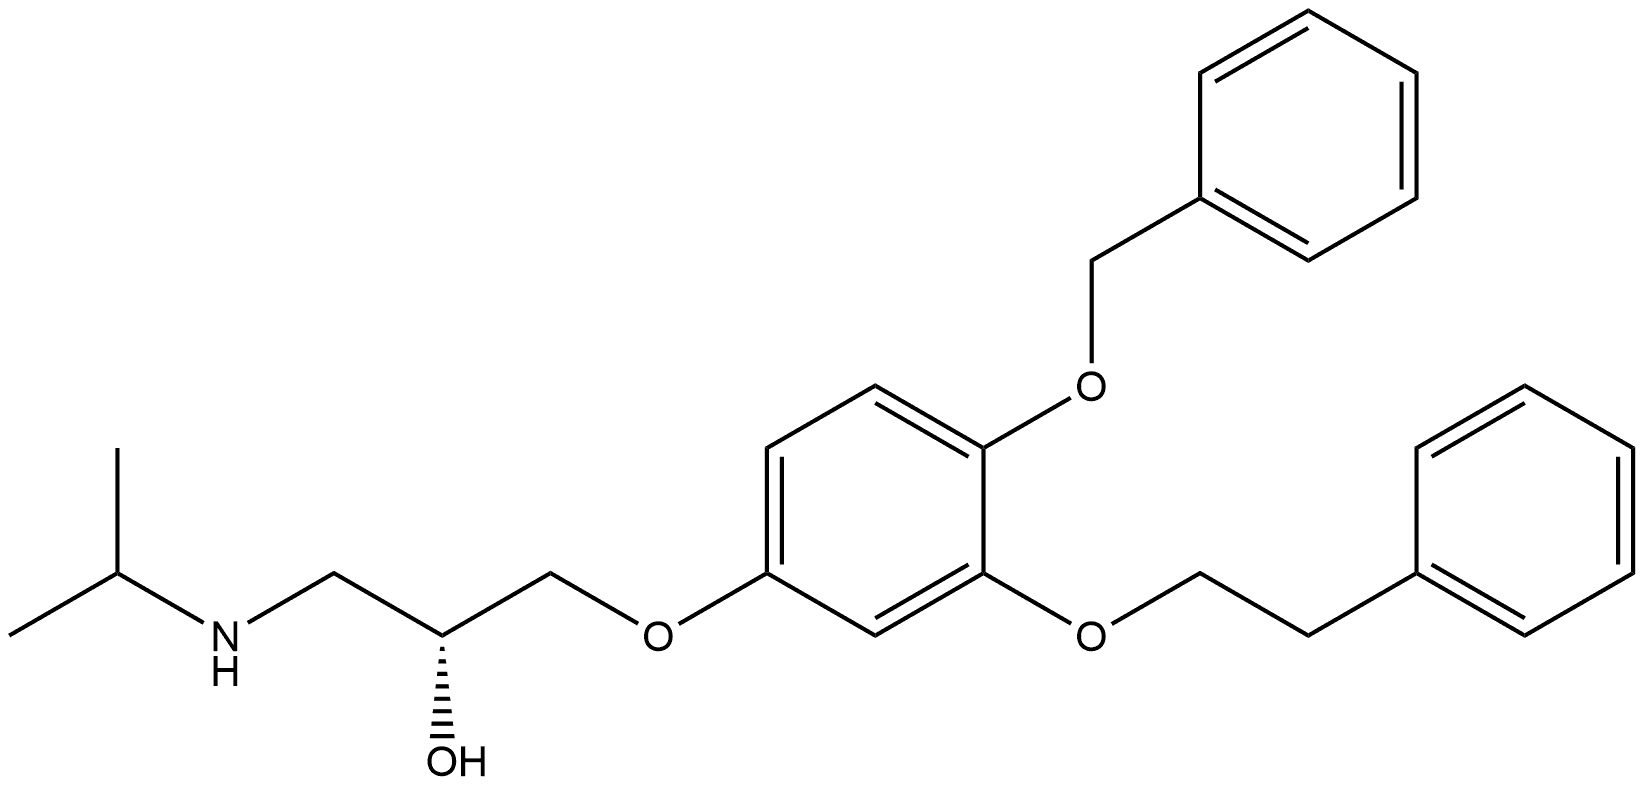 p62-ZZ ligand YOK-1304 구조식 이미지